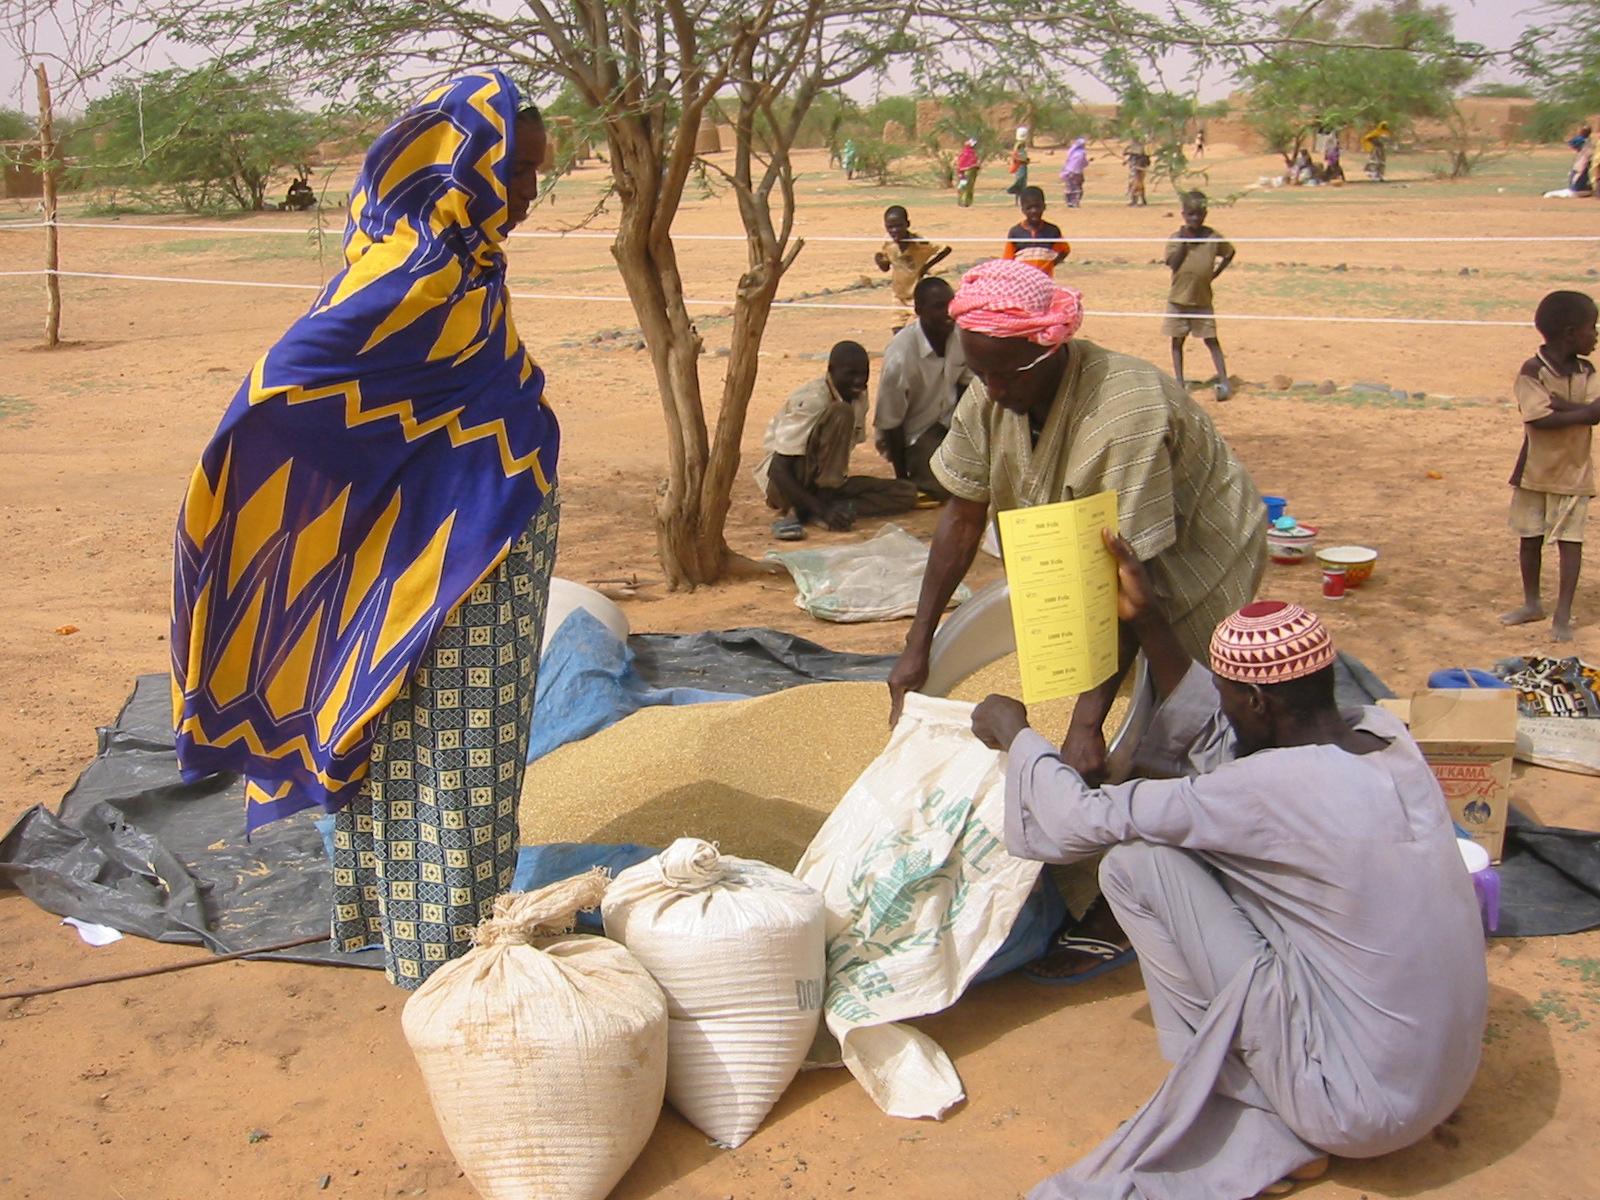 Seeds fair int he Zinder region, Niger